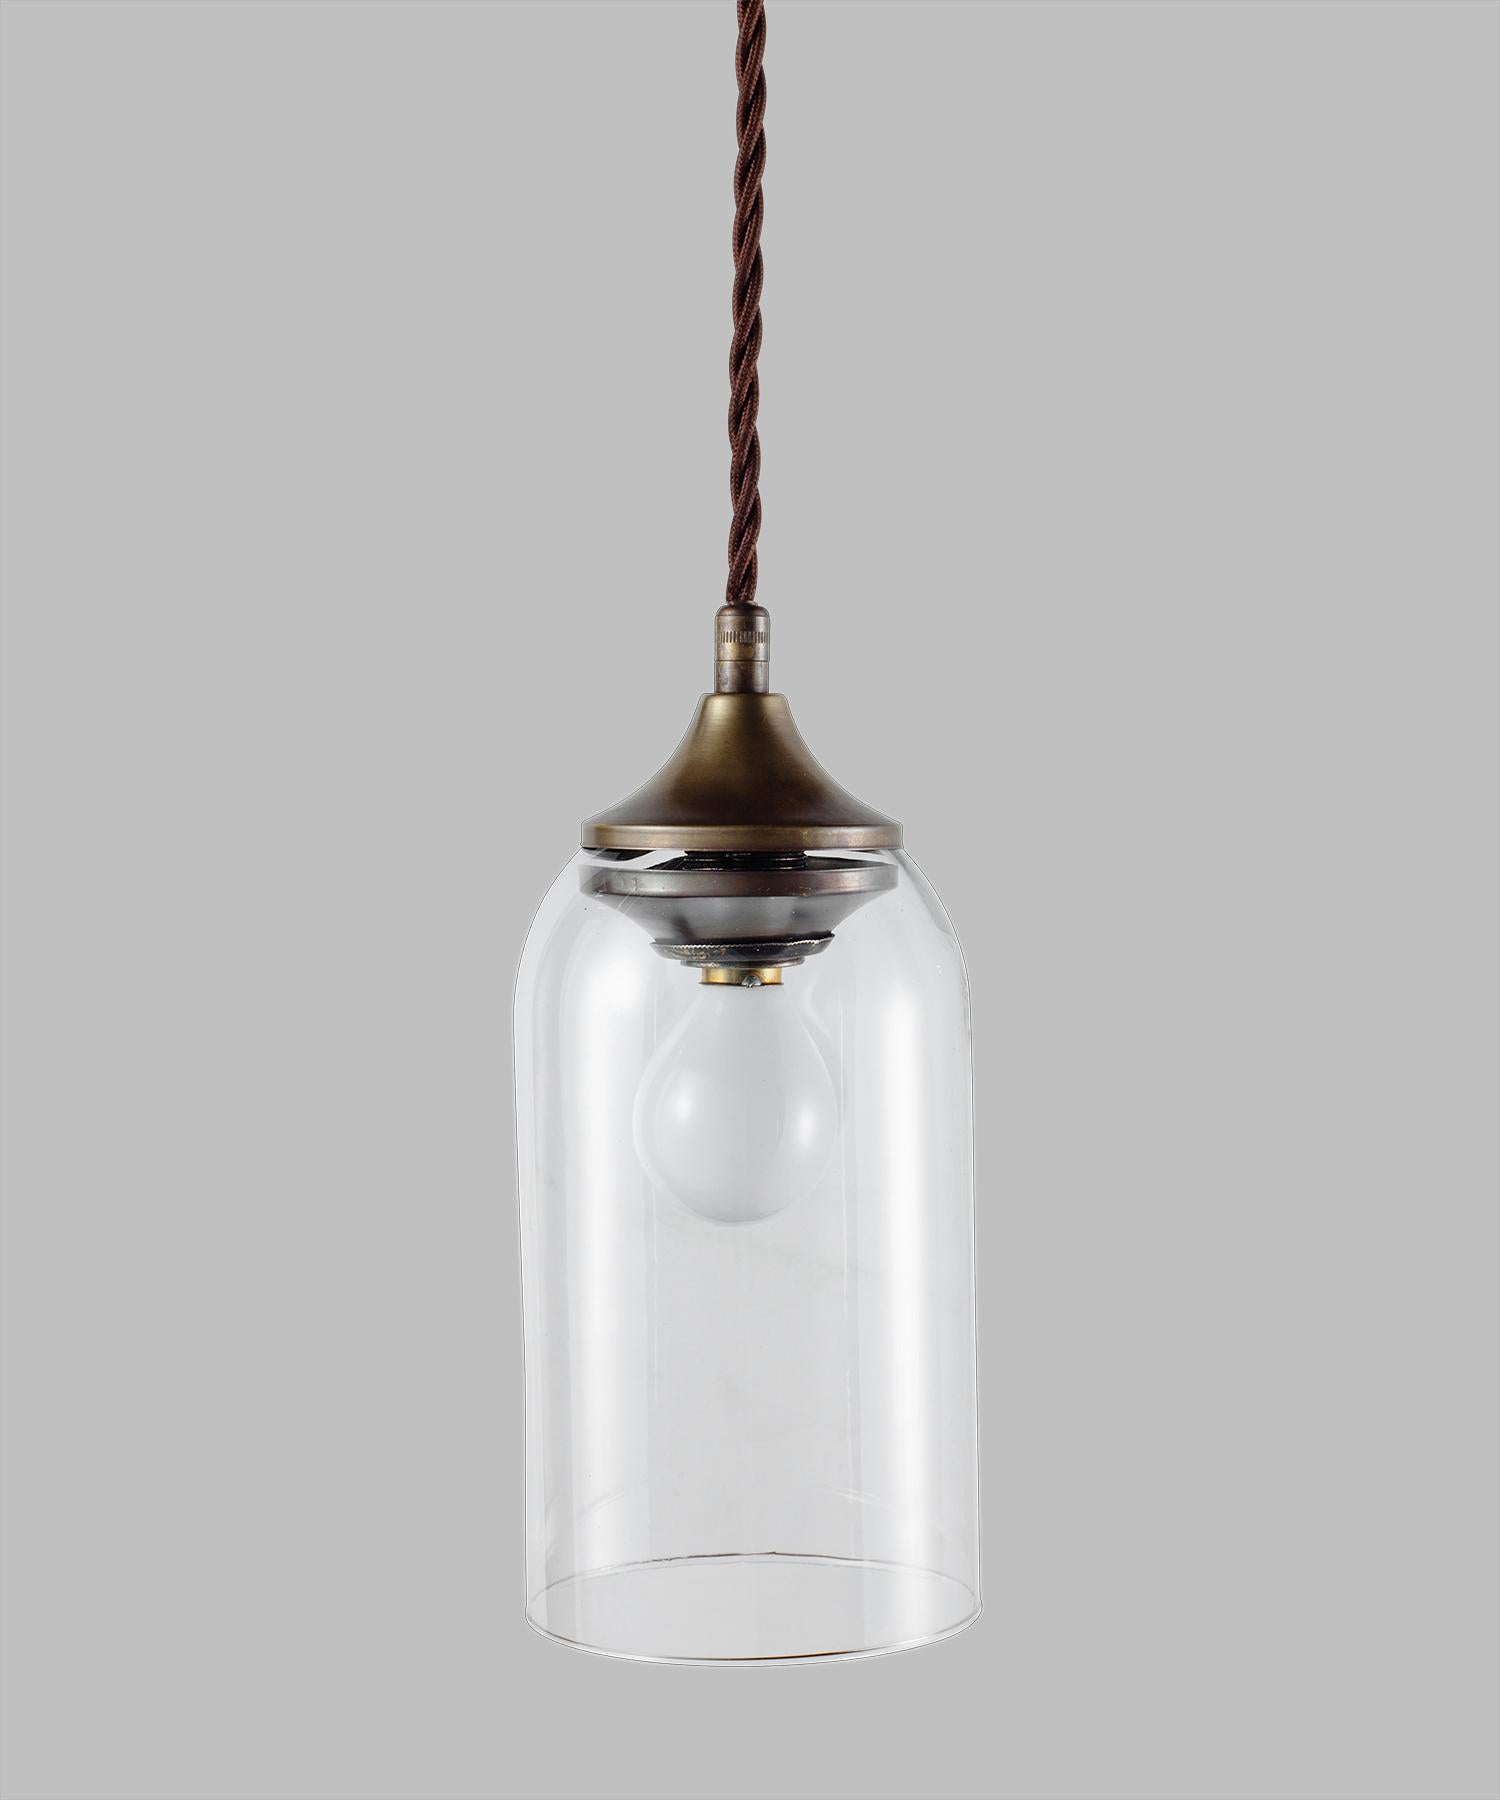 Italian Petite Bell Glass Pendant, Italy, 21st century